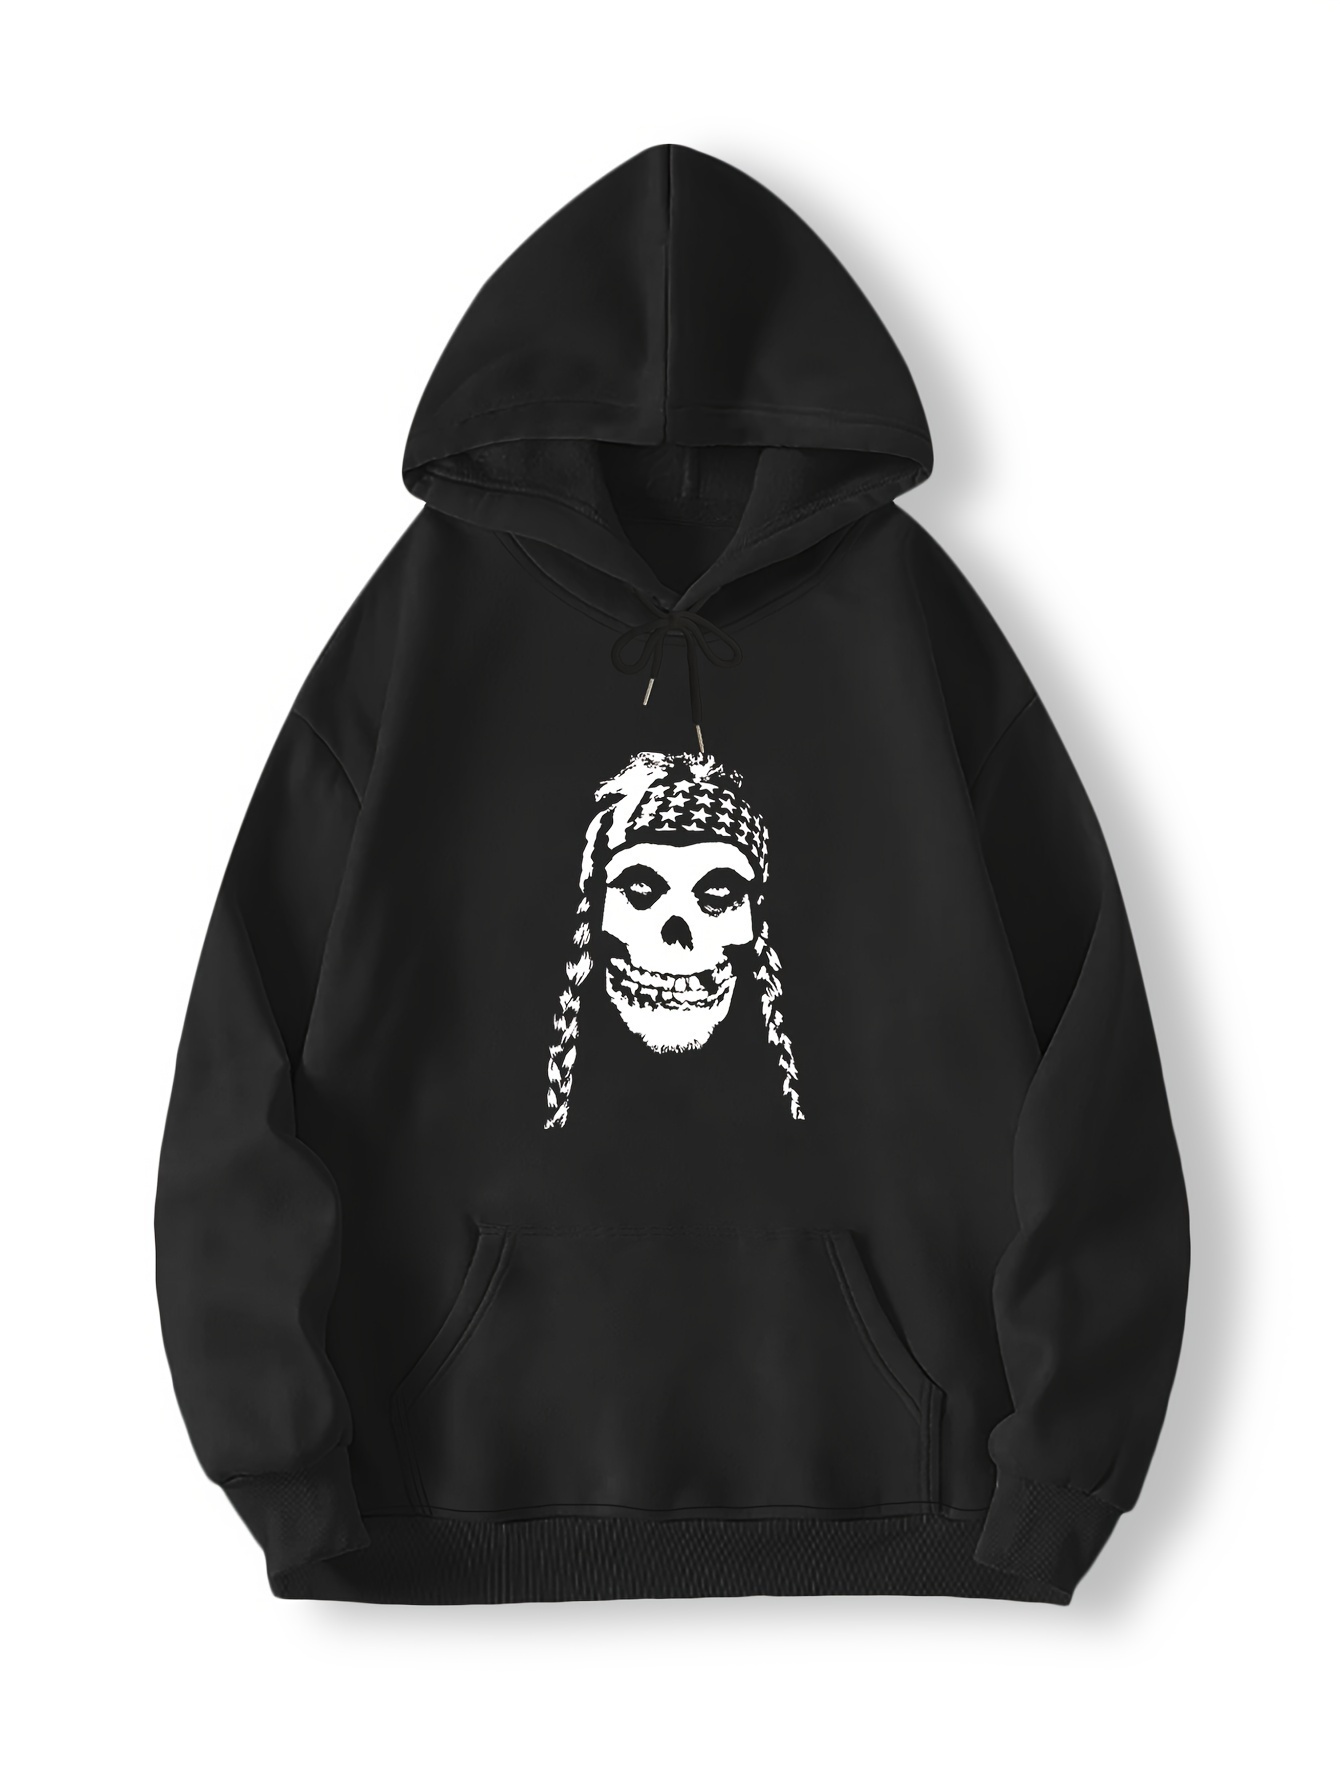 Unisex Pirate Caribean Hoodies 3D Printing Skull Graphic Hoodies Fleece  Pullover Hooded Sweatshirt Pockets Set 6